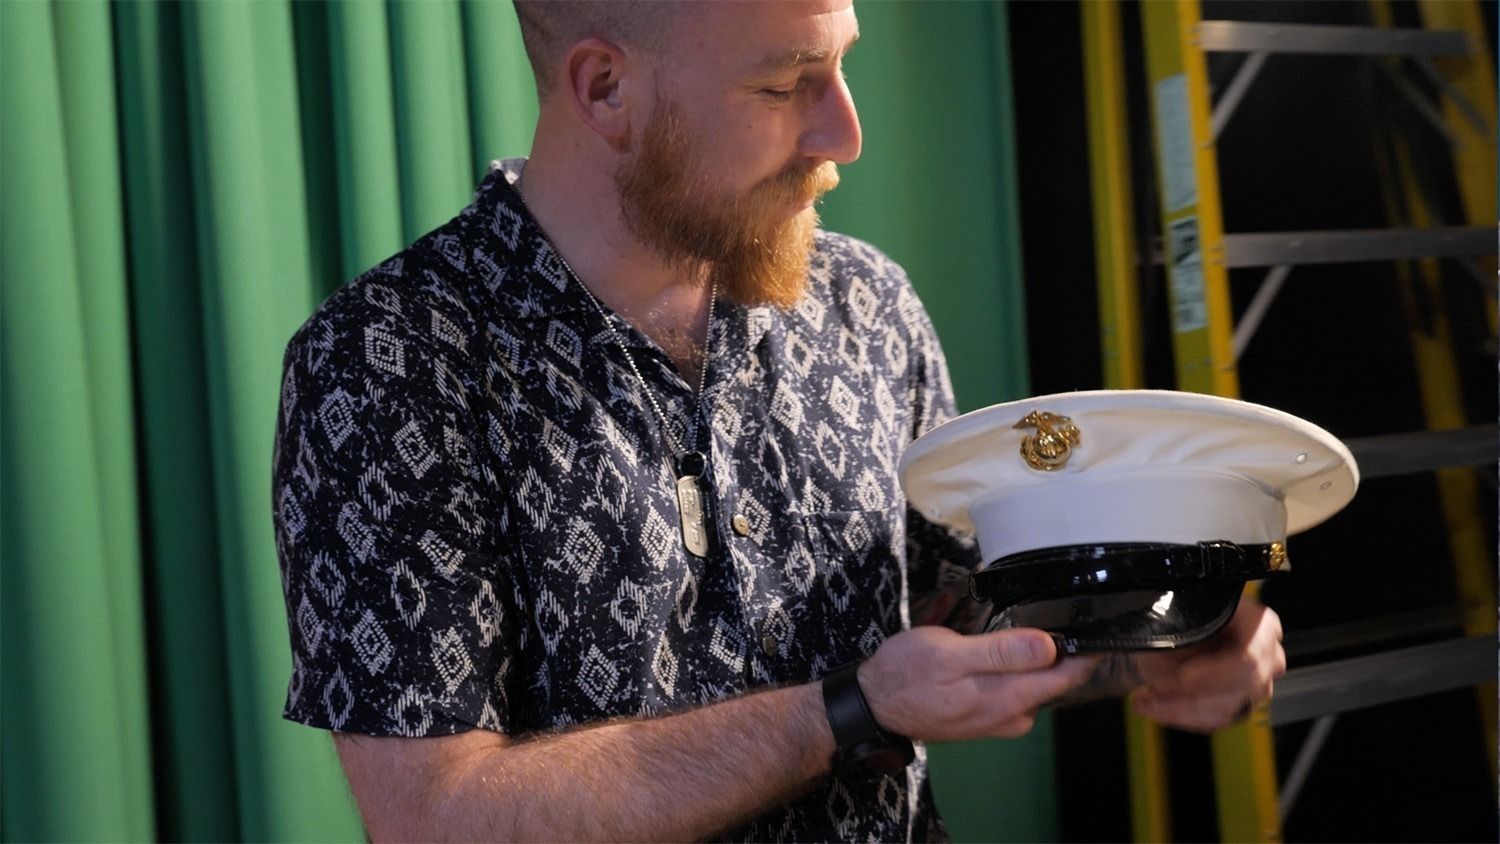 David Miller holding a marine hat